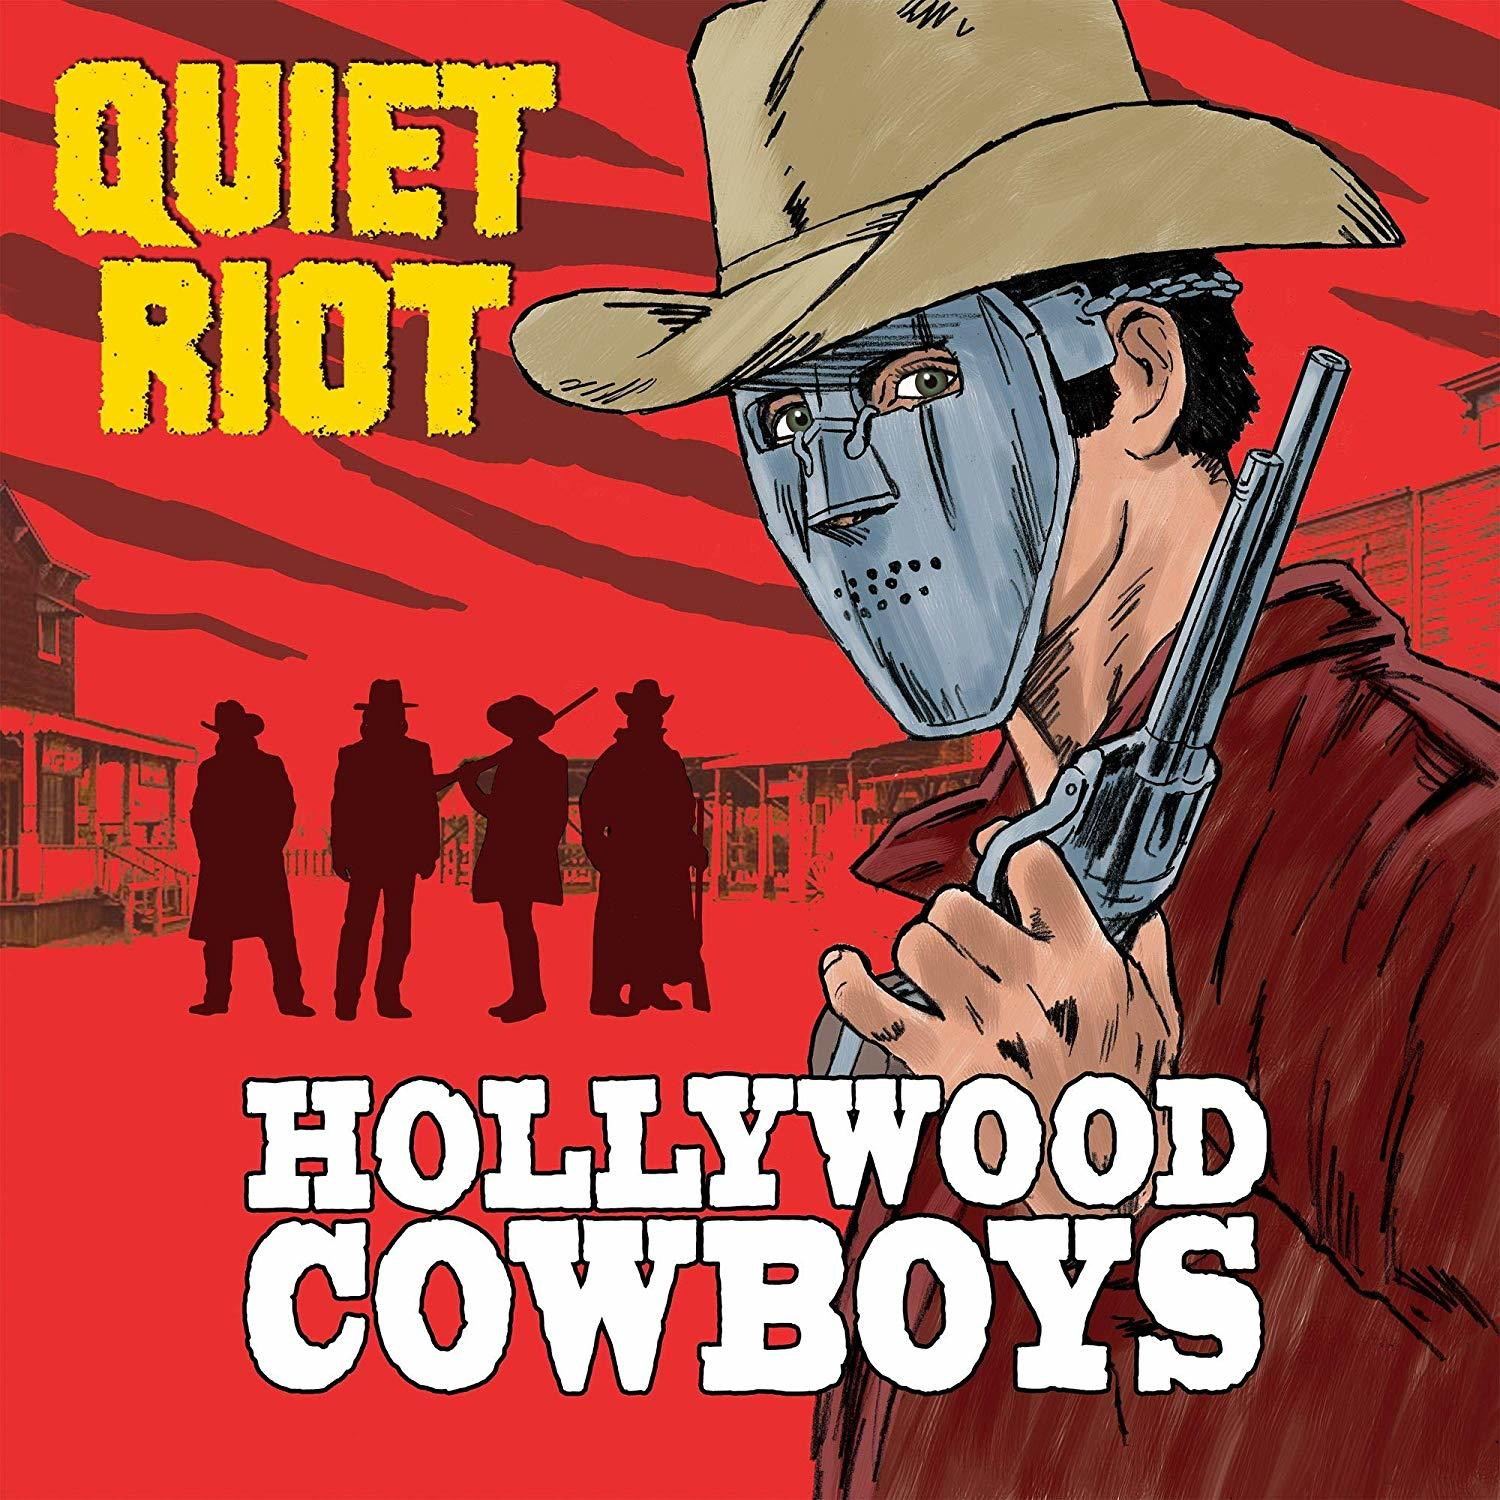 - HOLLYWOOD Riot COWBOYS (Vinyl) - Quiet